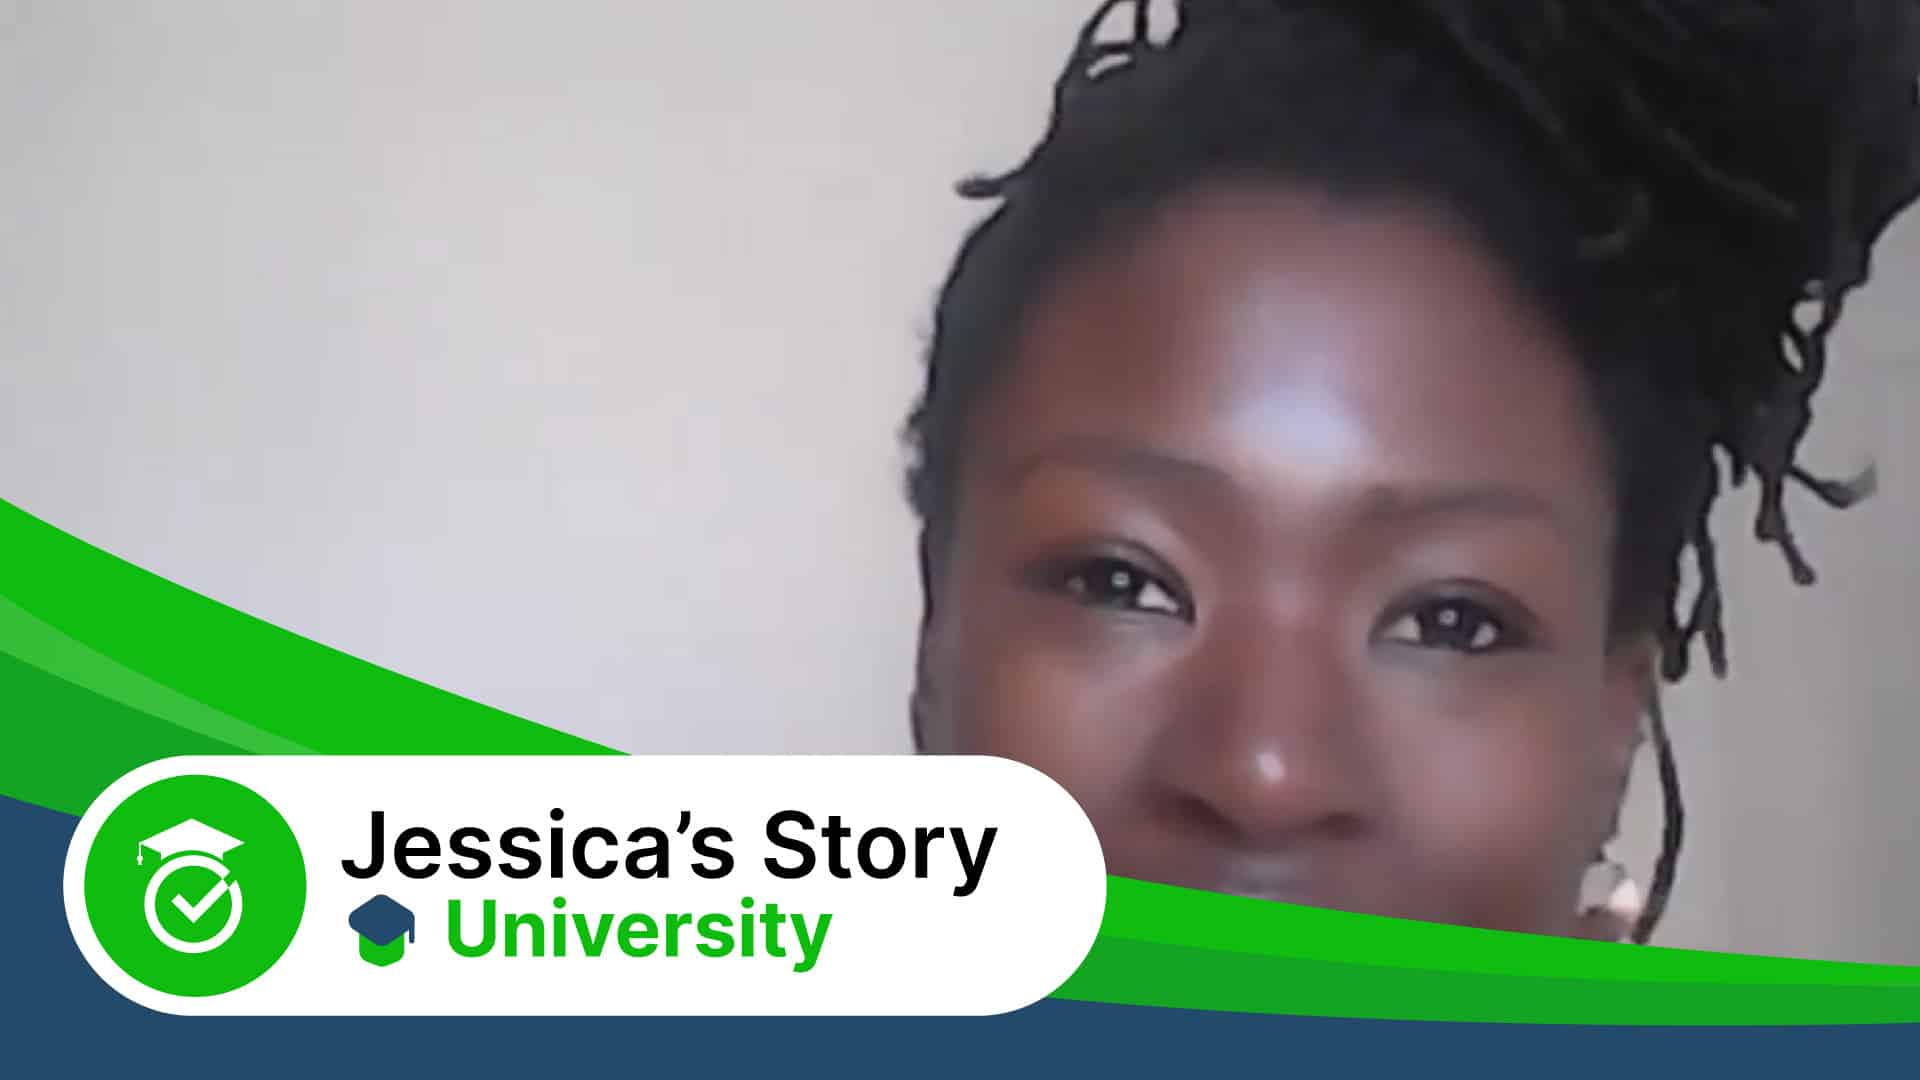 Jessica's Story: Educational Psychology testimonial